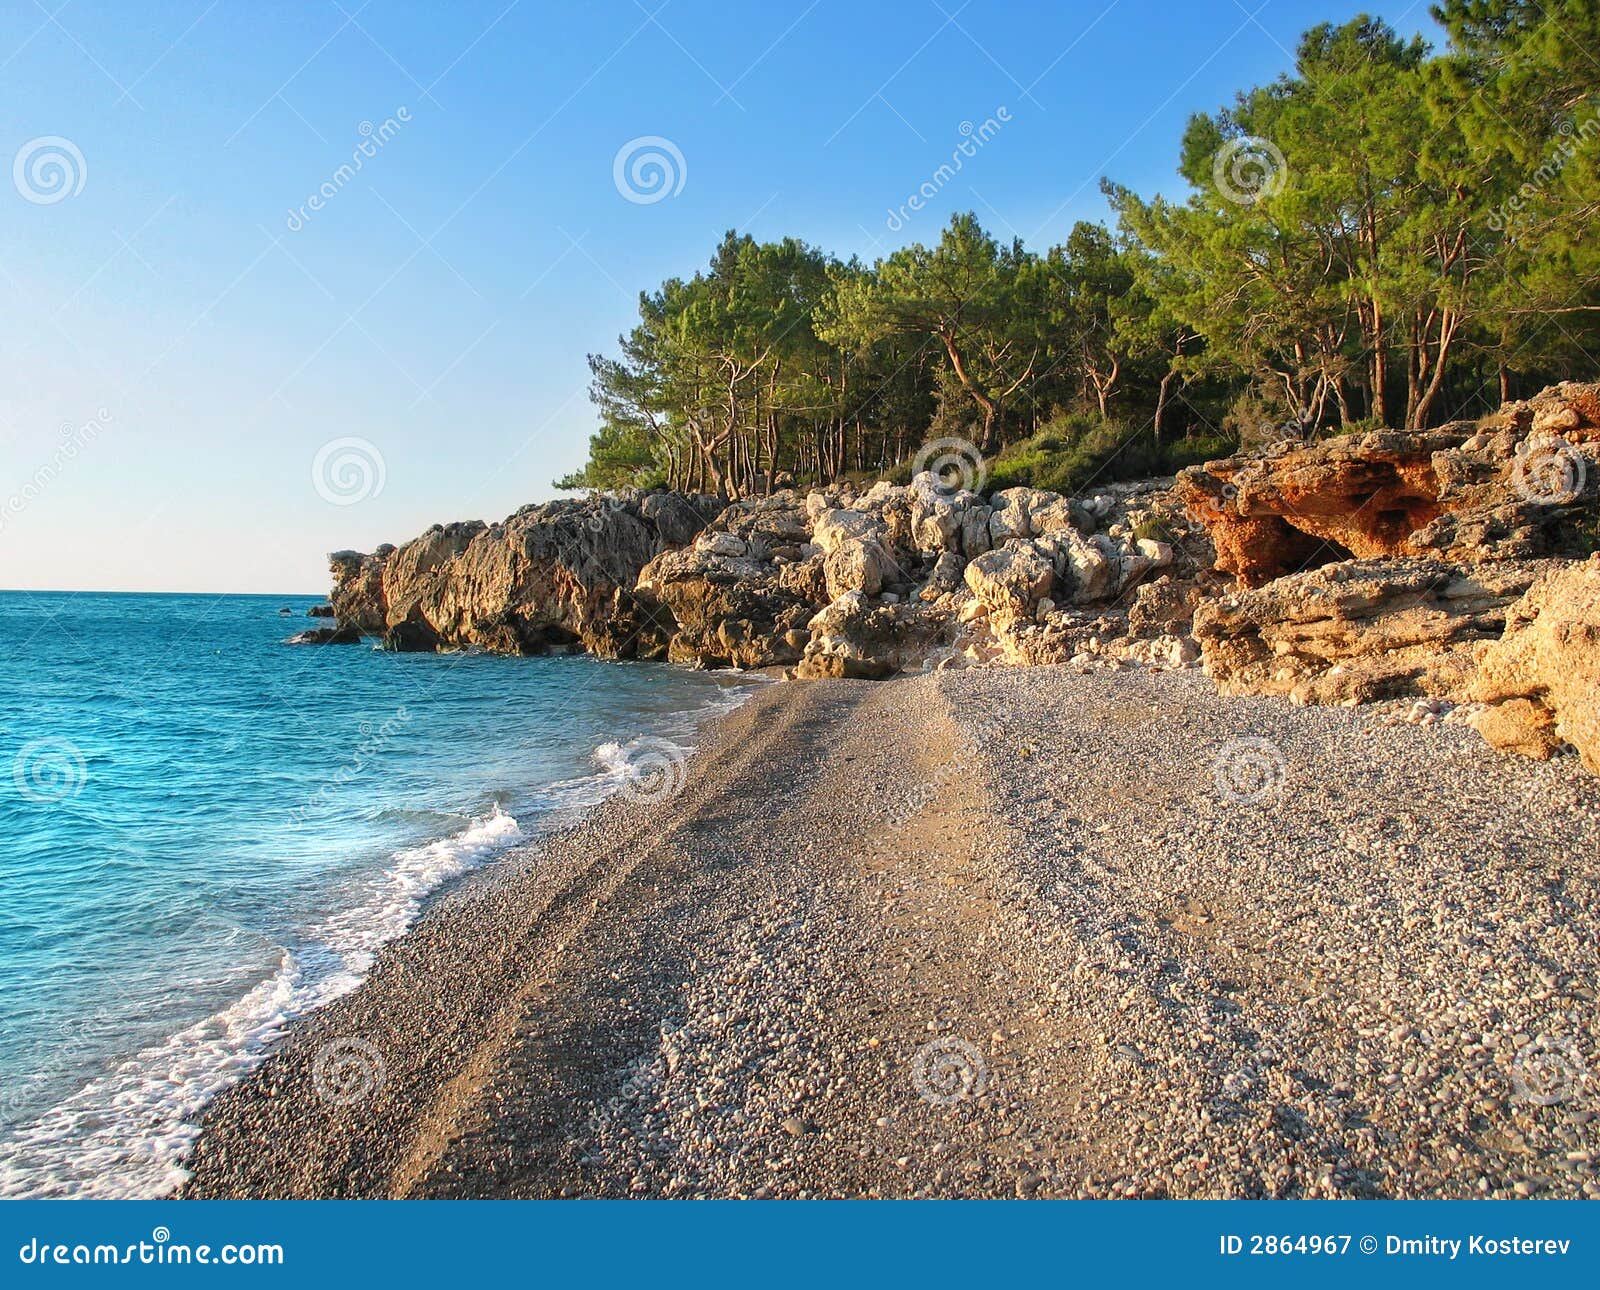 antalya wild beach